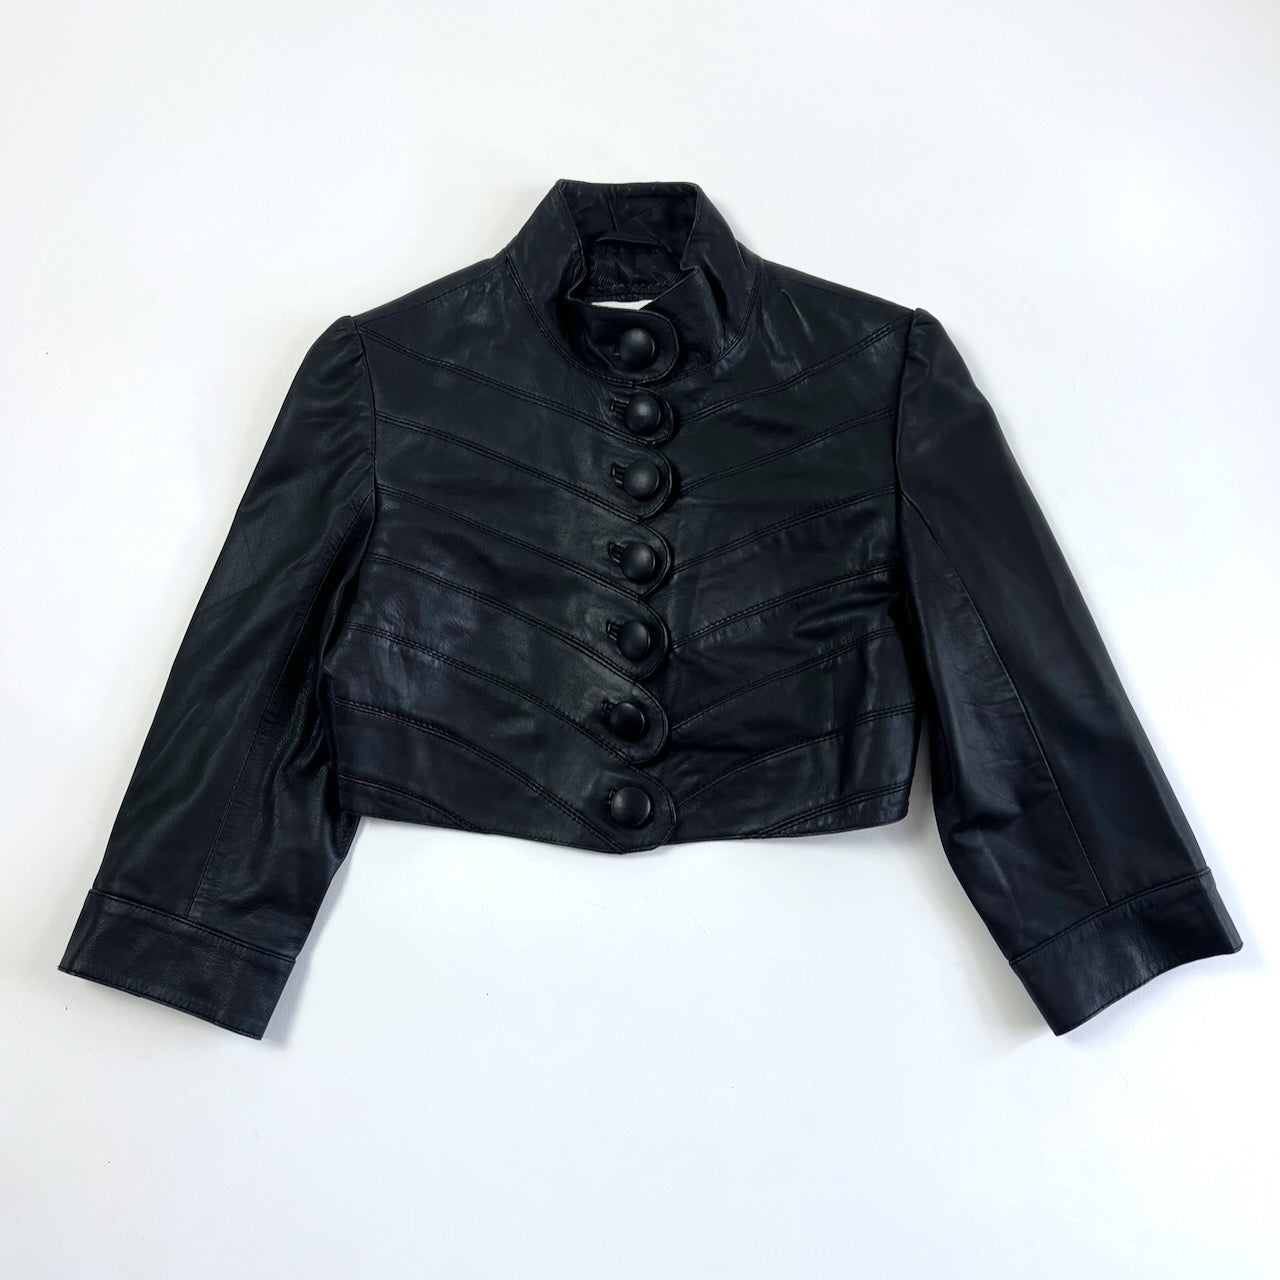 Gestuz cropped black leather jacket